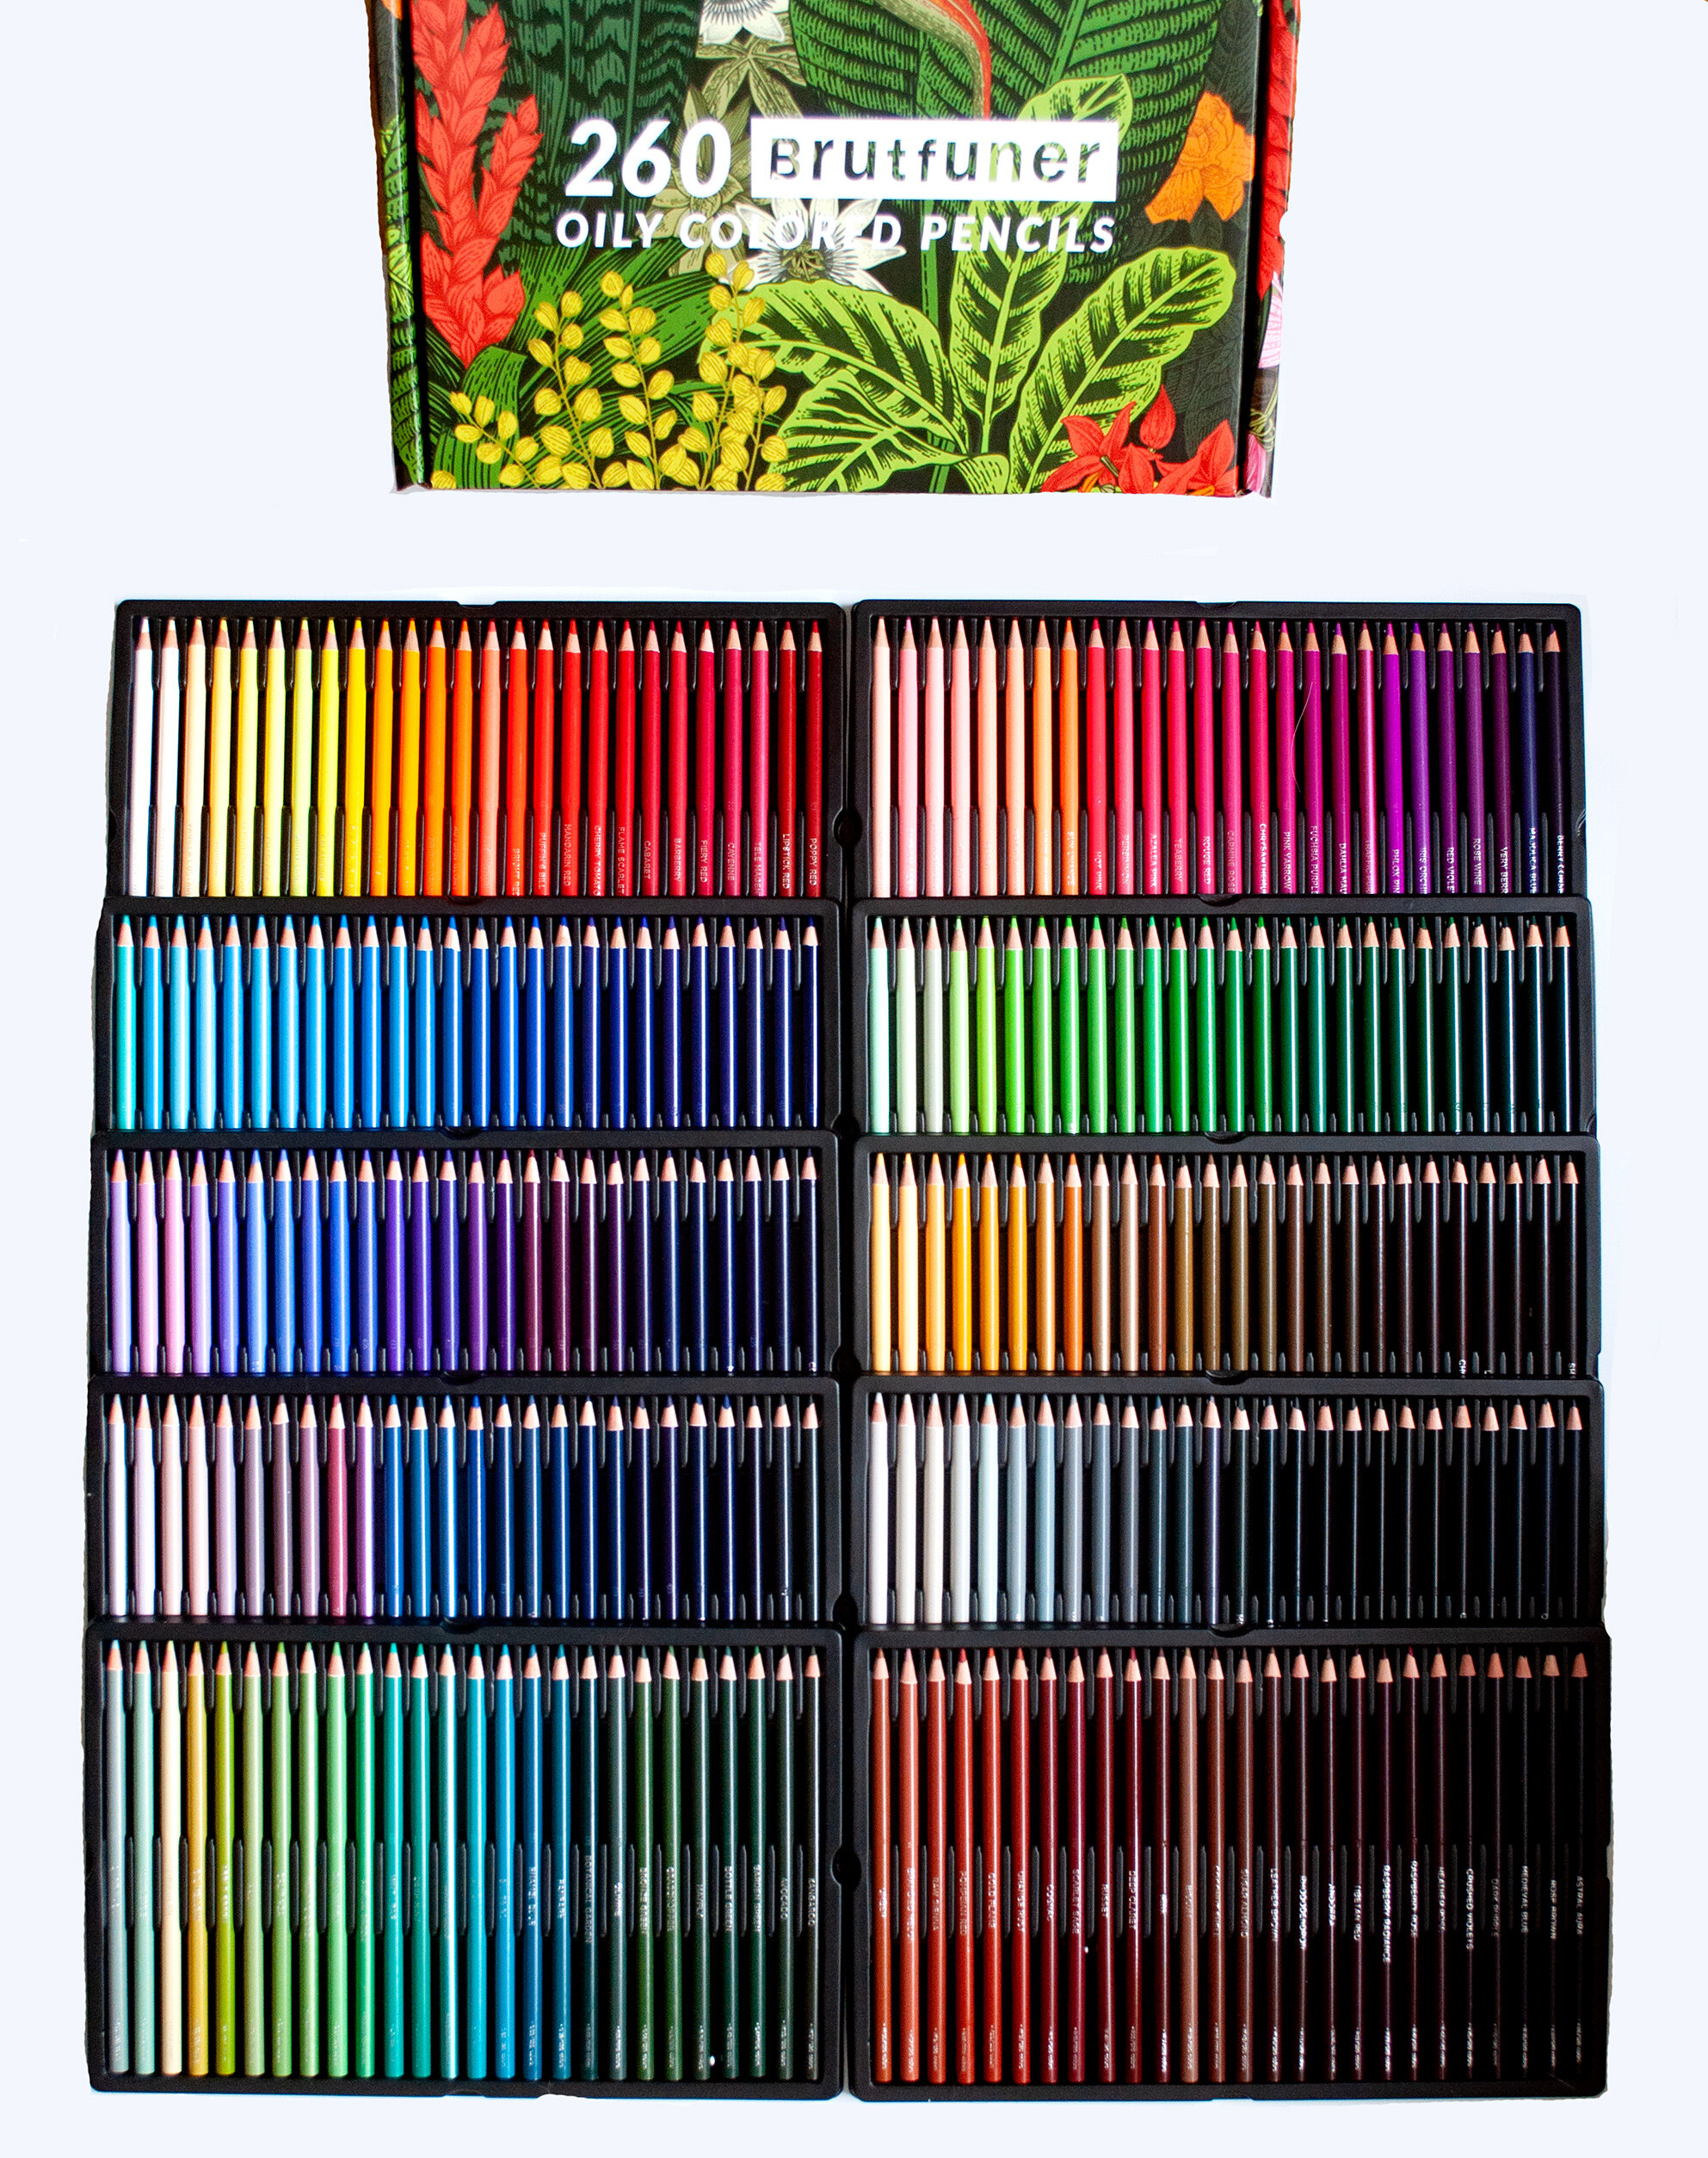 Colored Pencil 520 Colors, Oil-based Colored Pencil